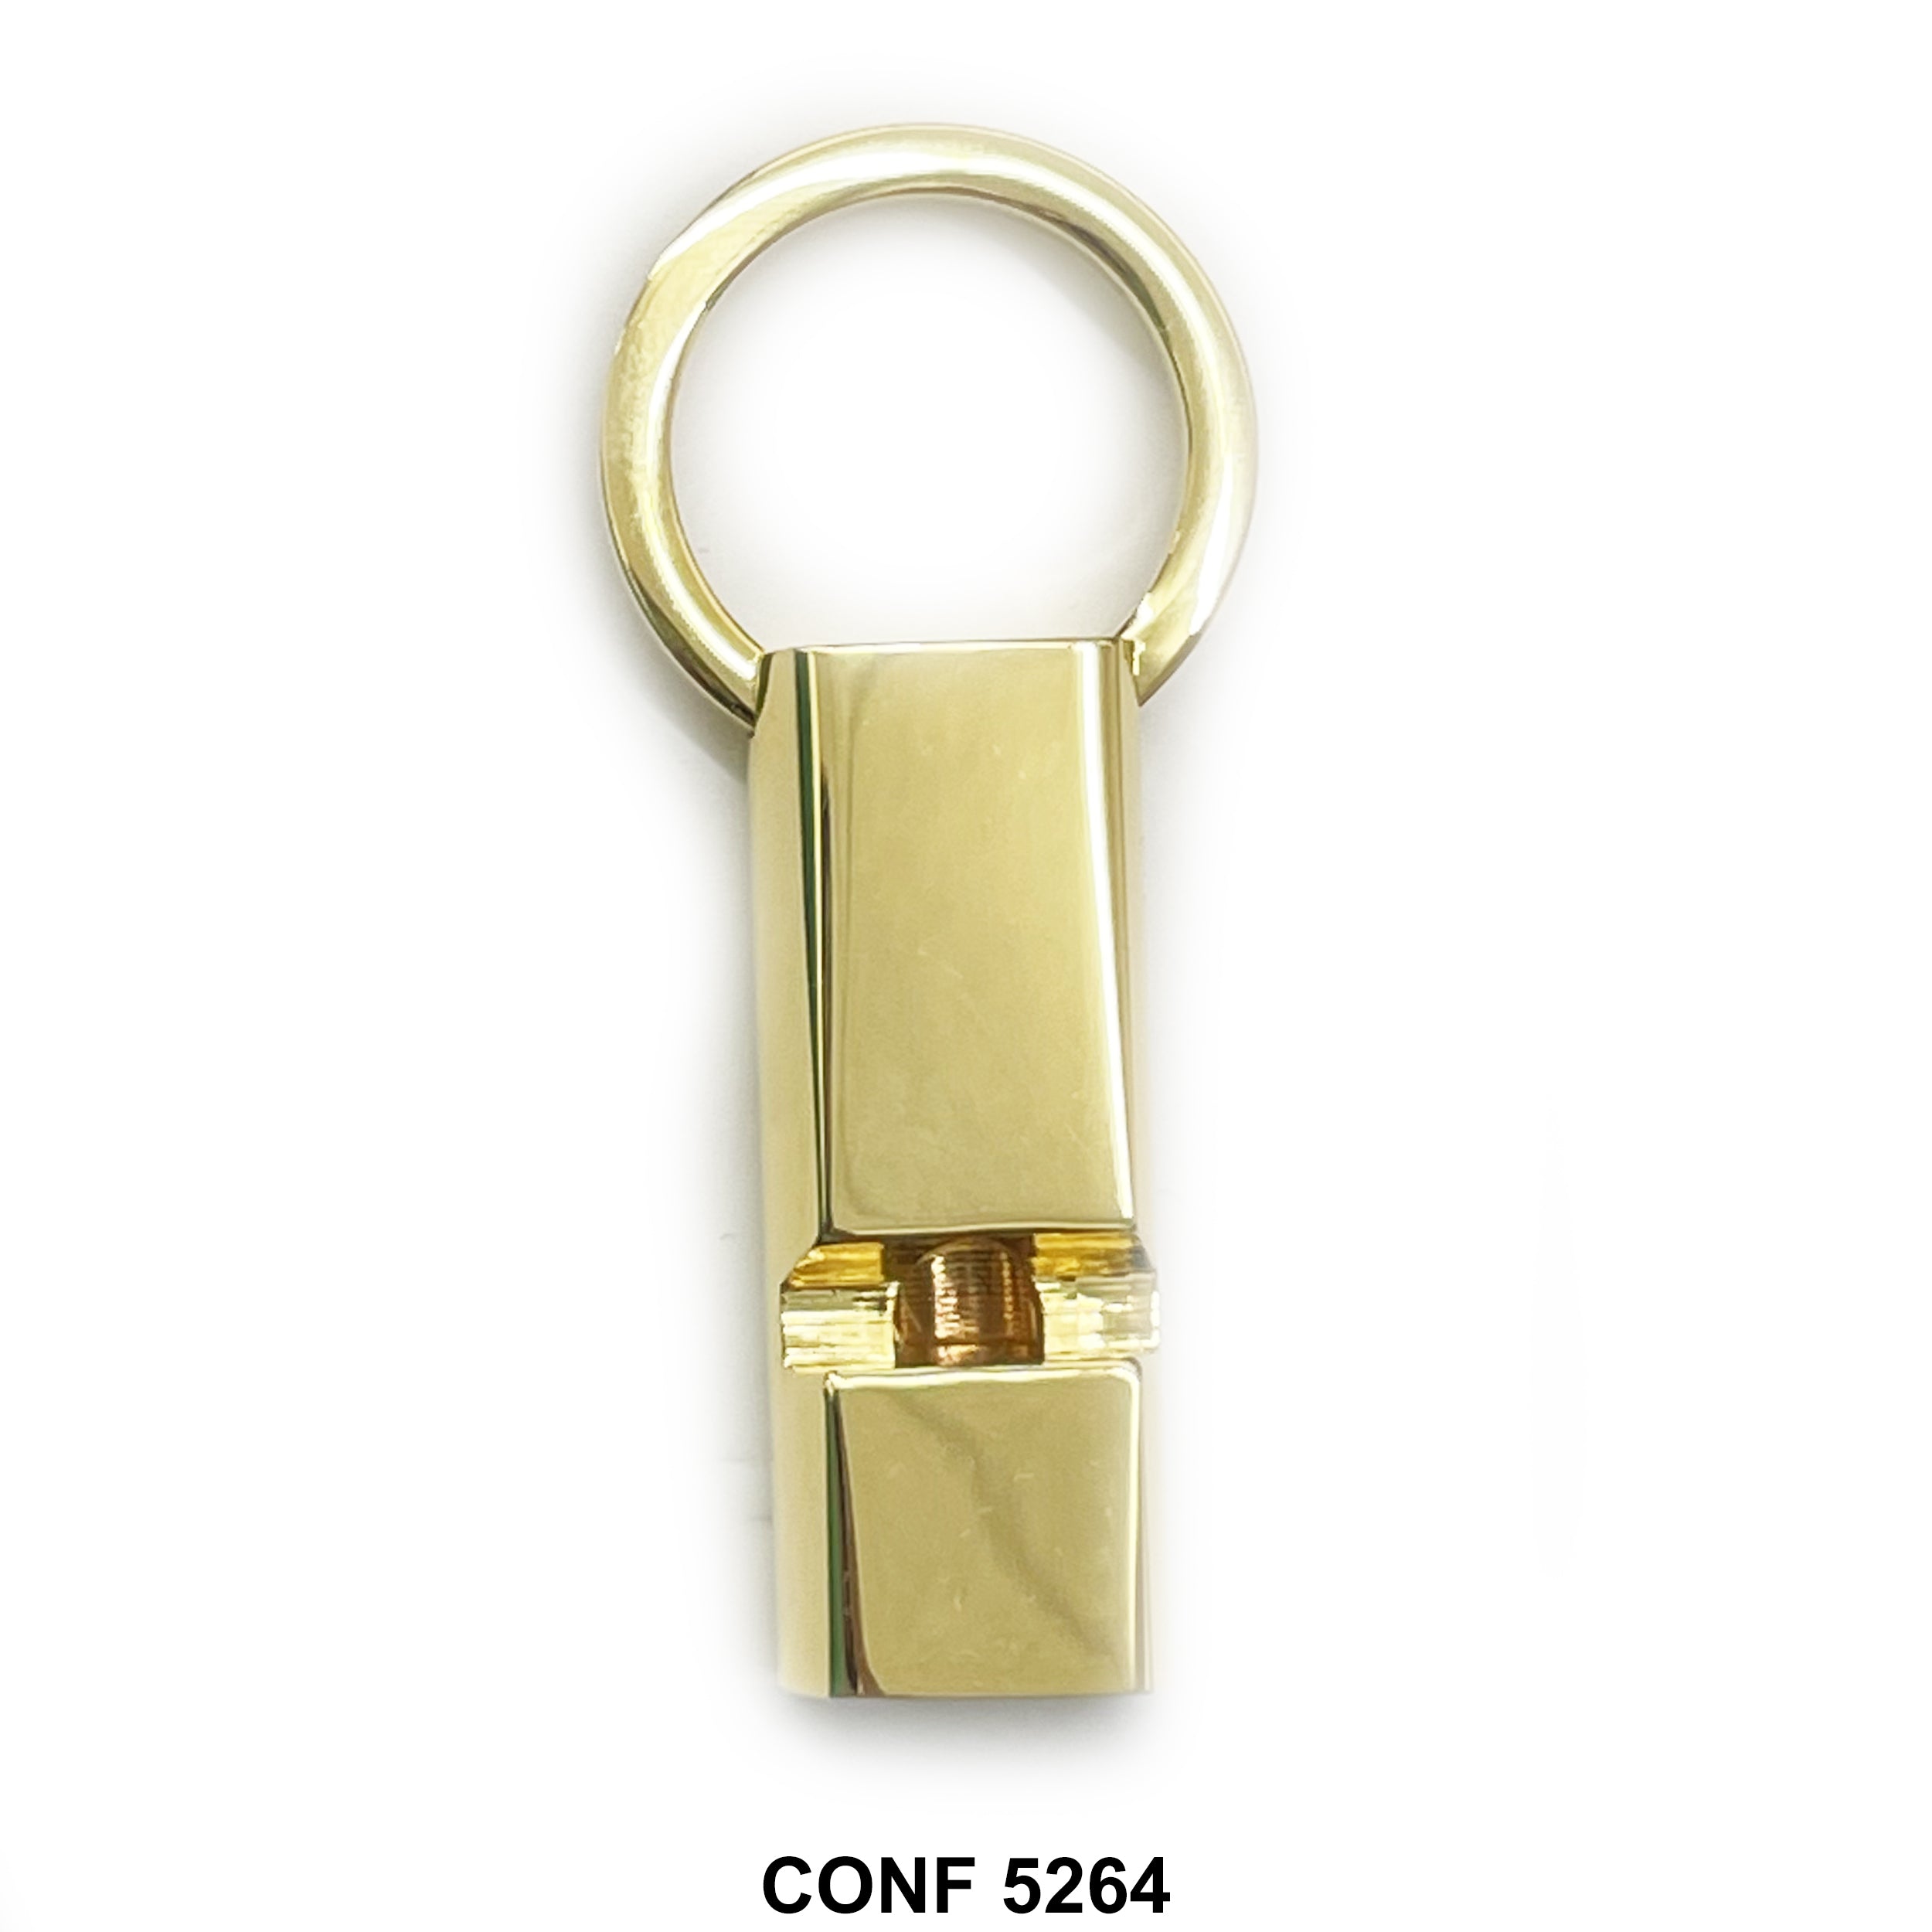 Pull Twist Whistle Keychain CONF 5264